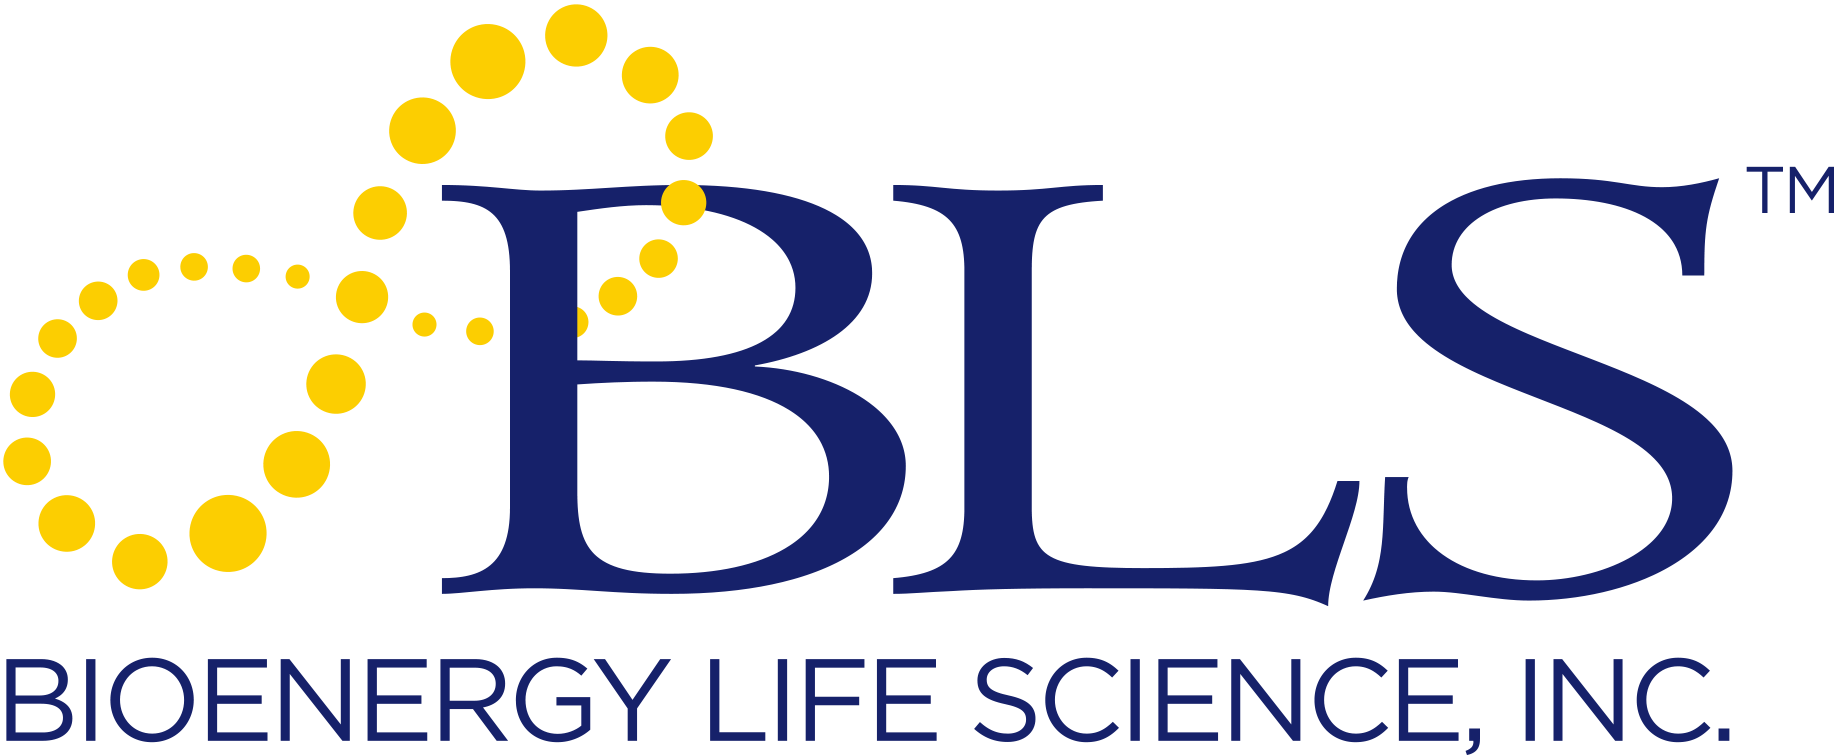 Bioenergy Life Science, Inc (BLS)